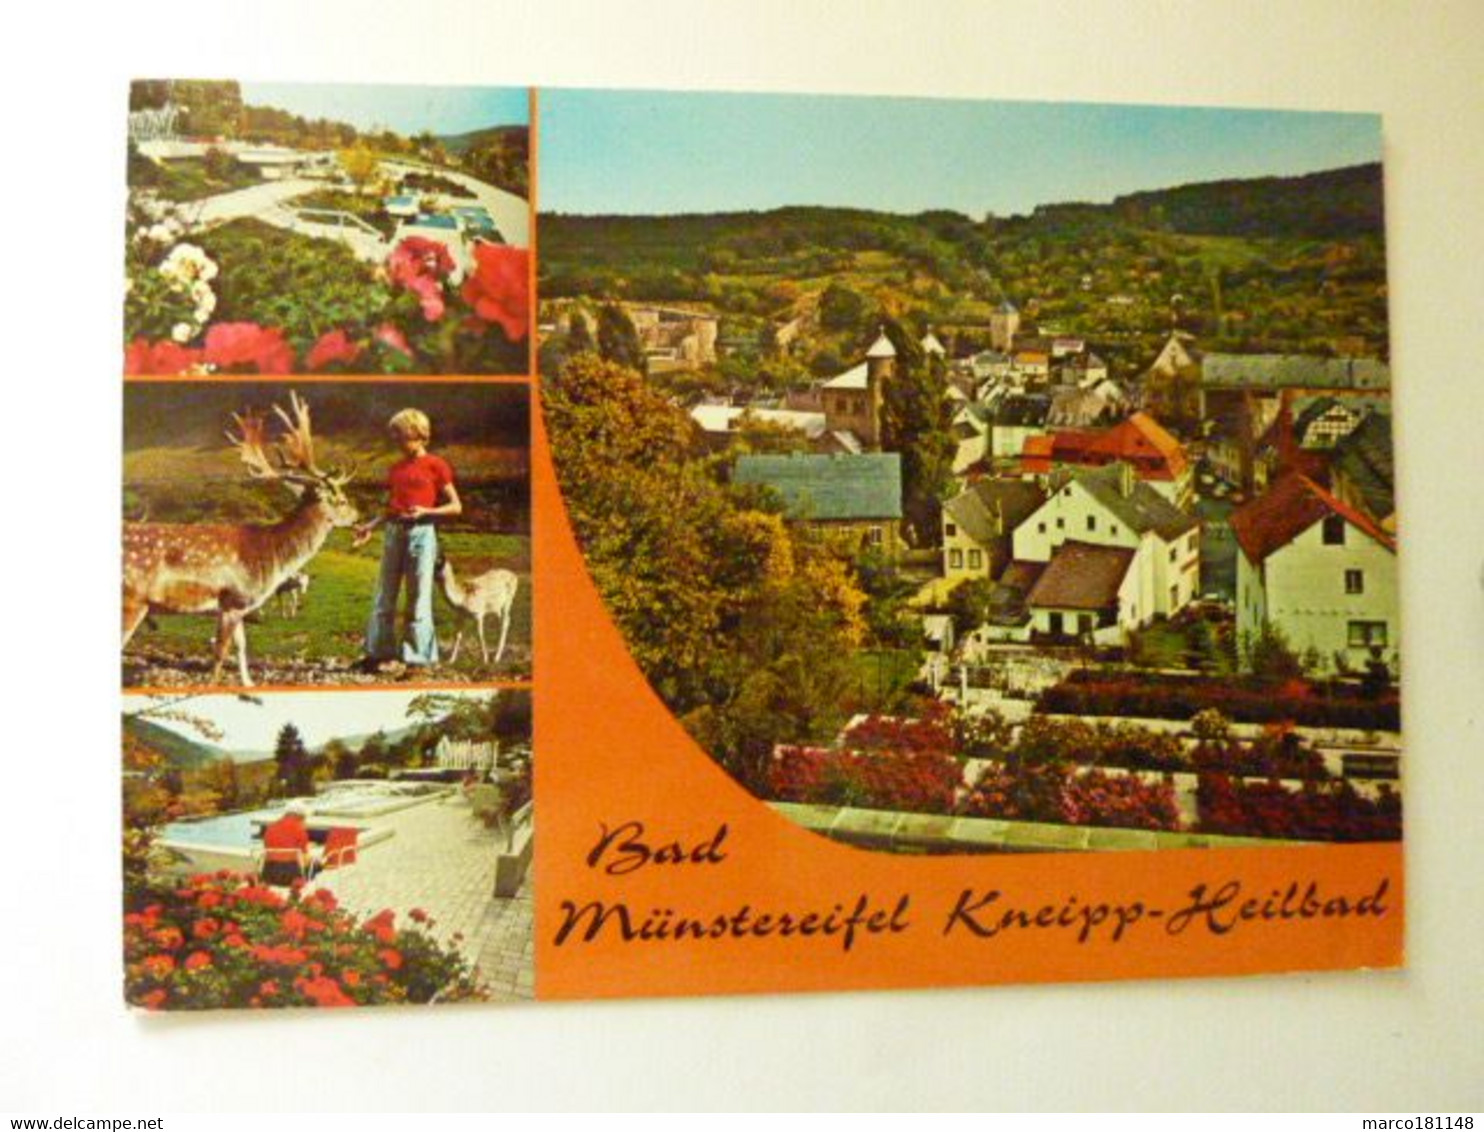 Bad Münstereifel Kneipp-Heilbad - Bad Münstereifel